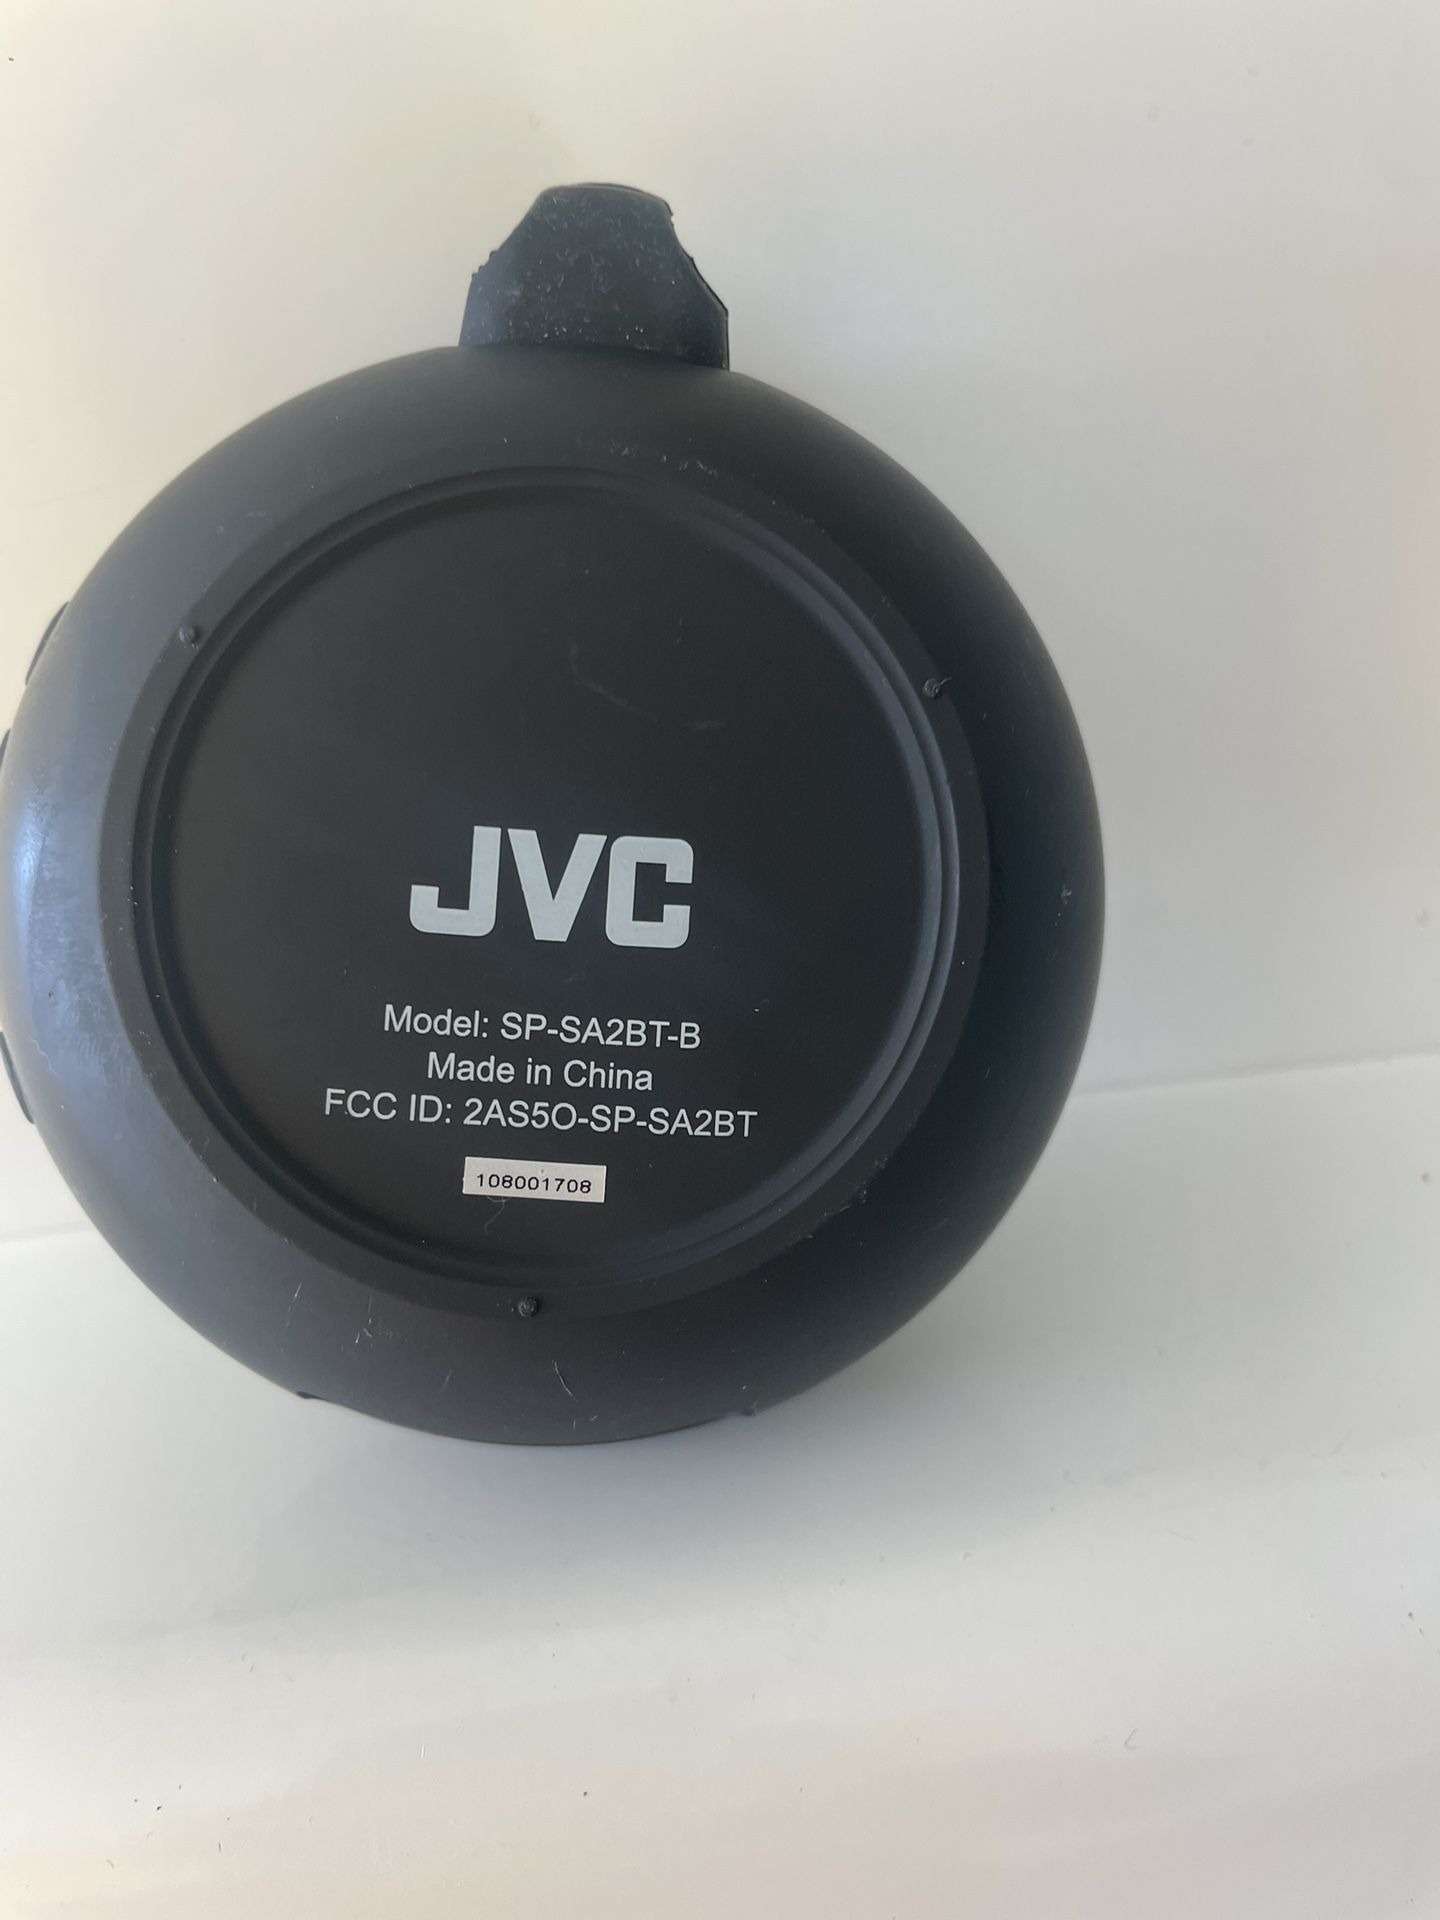 JVC Portable Speake $5